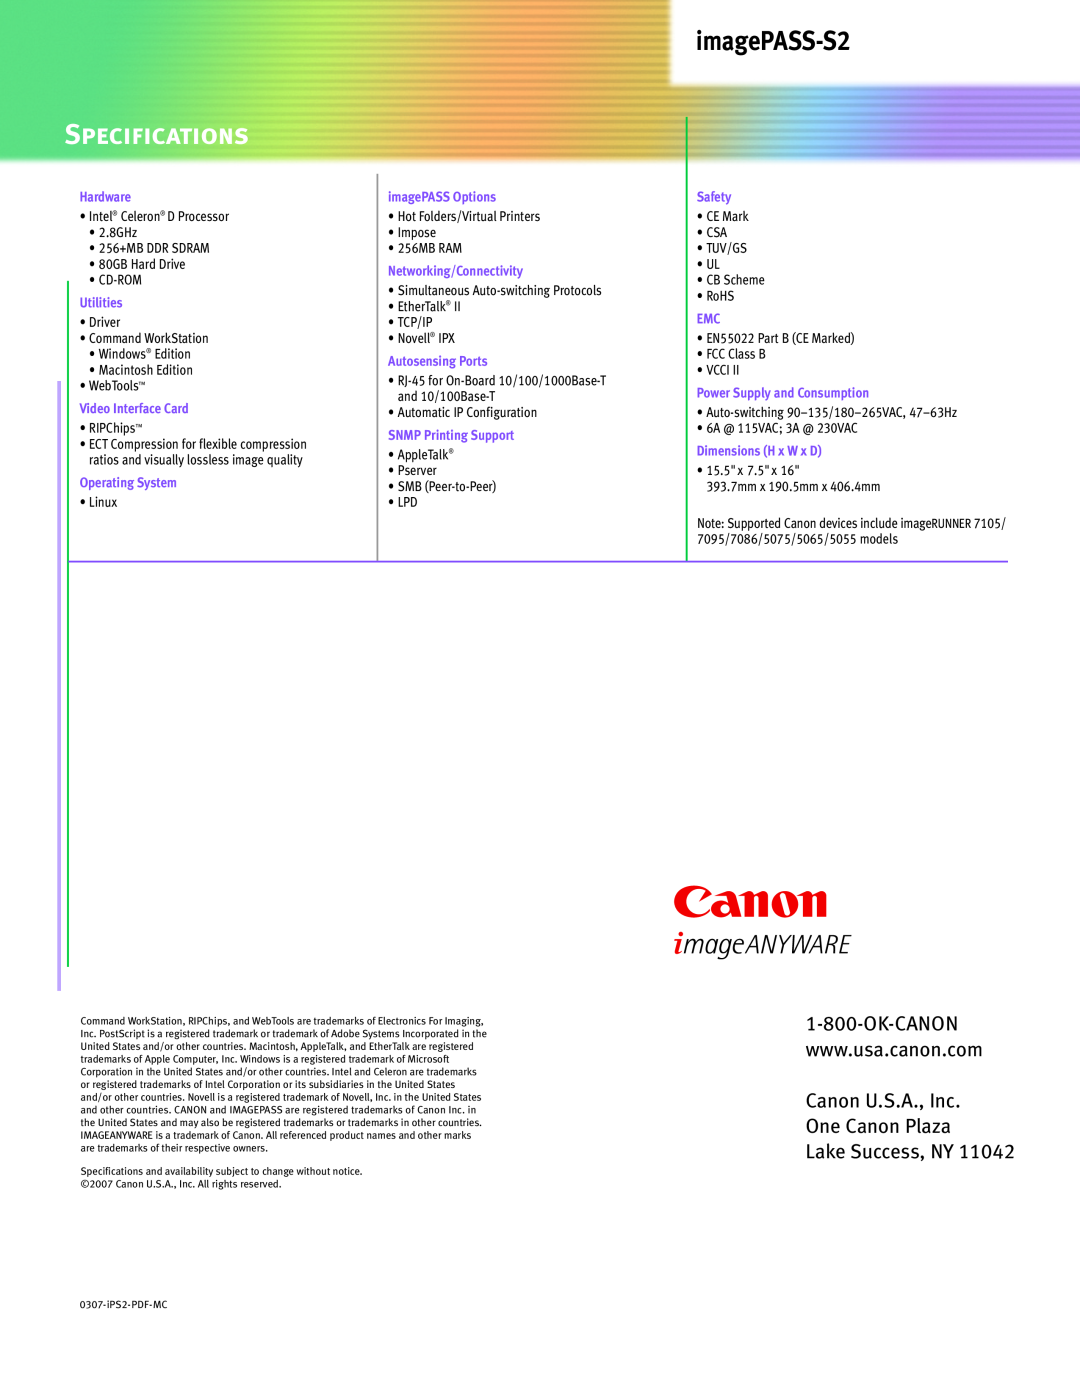 Canon IMAGEPASS-S2 manual Specifications, Canon U.S.A., Inc One Canon Plaza Lake Success, NY, imagePASS-S2 